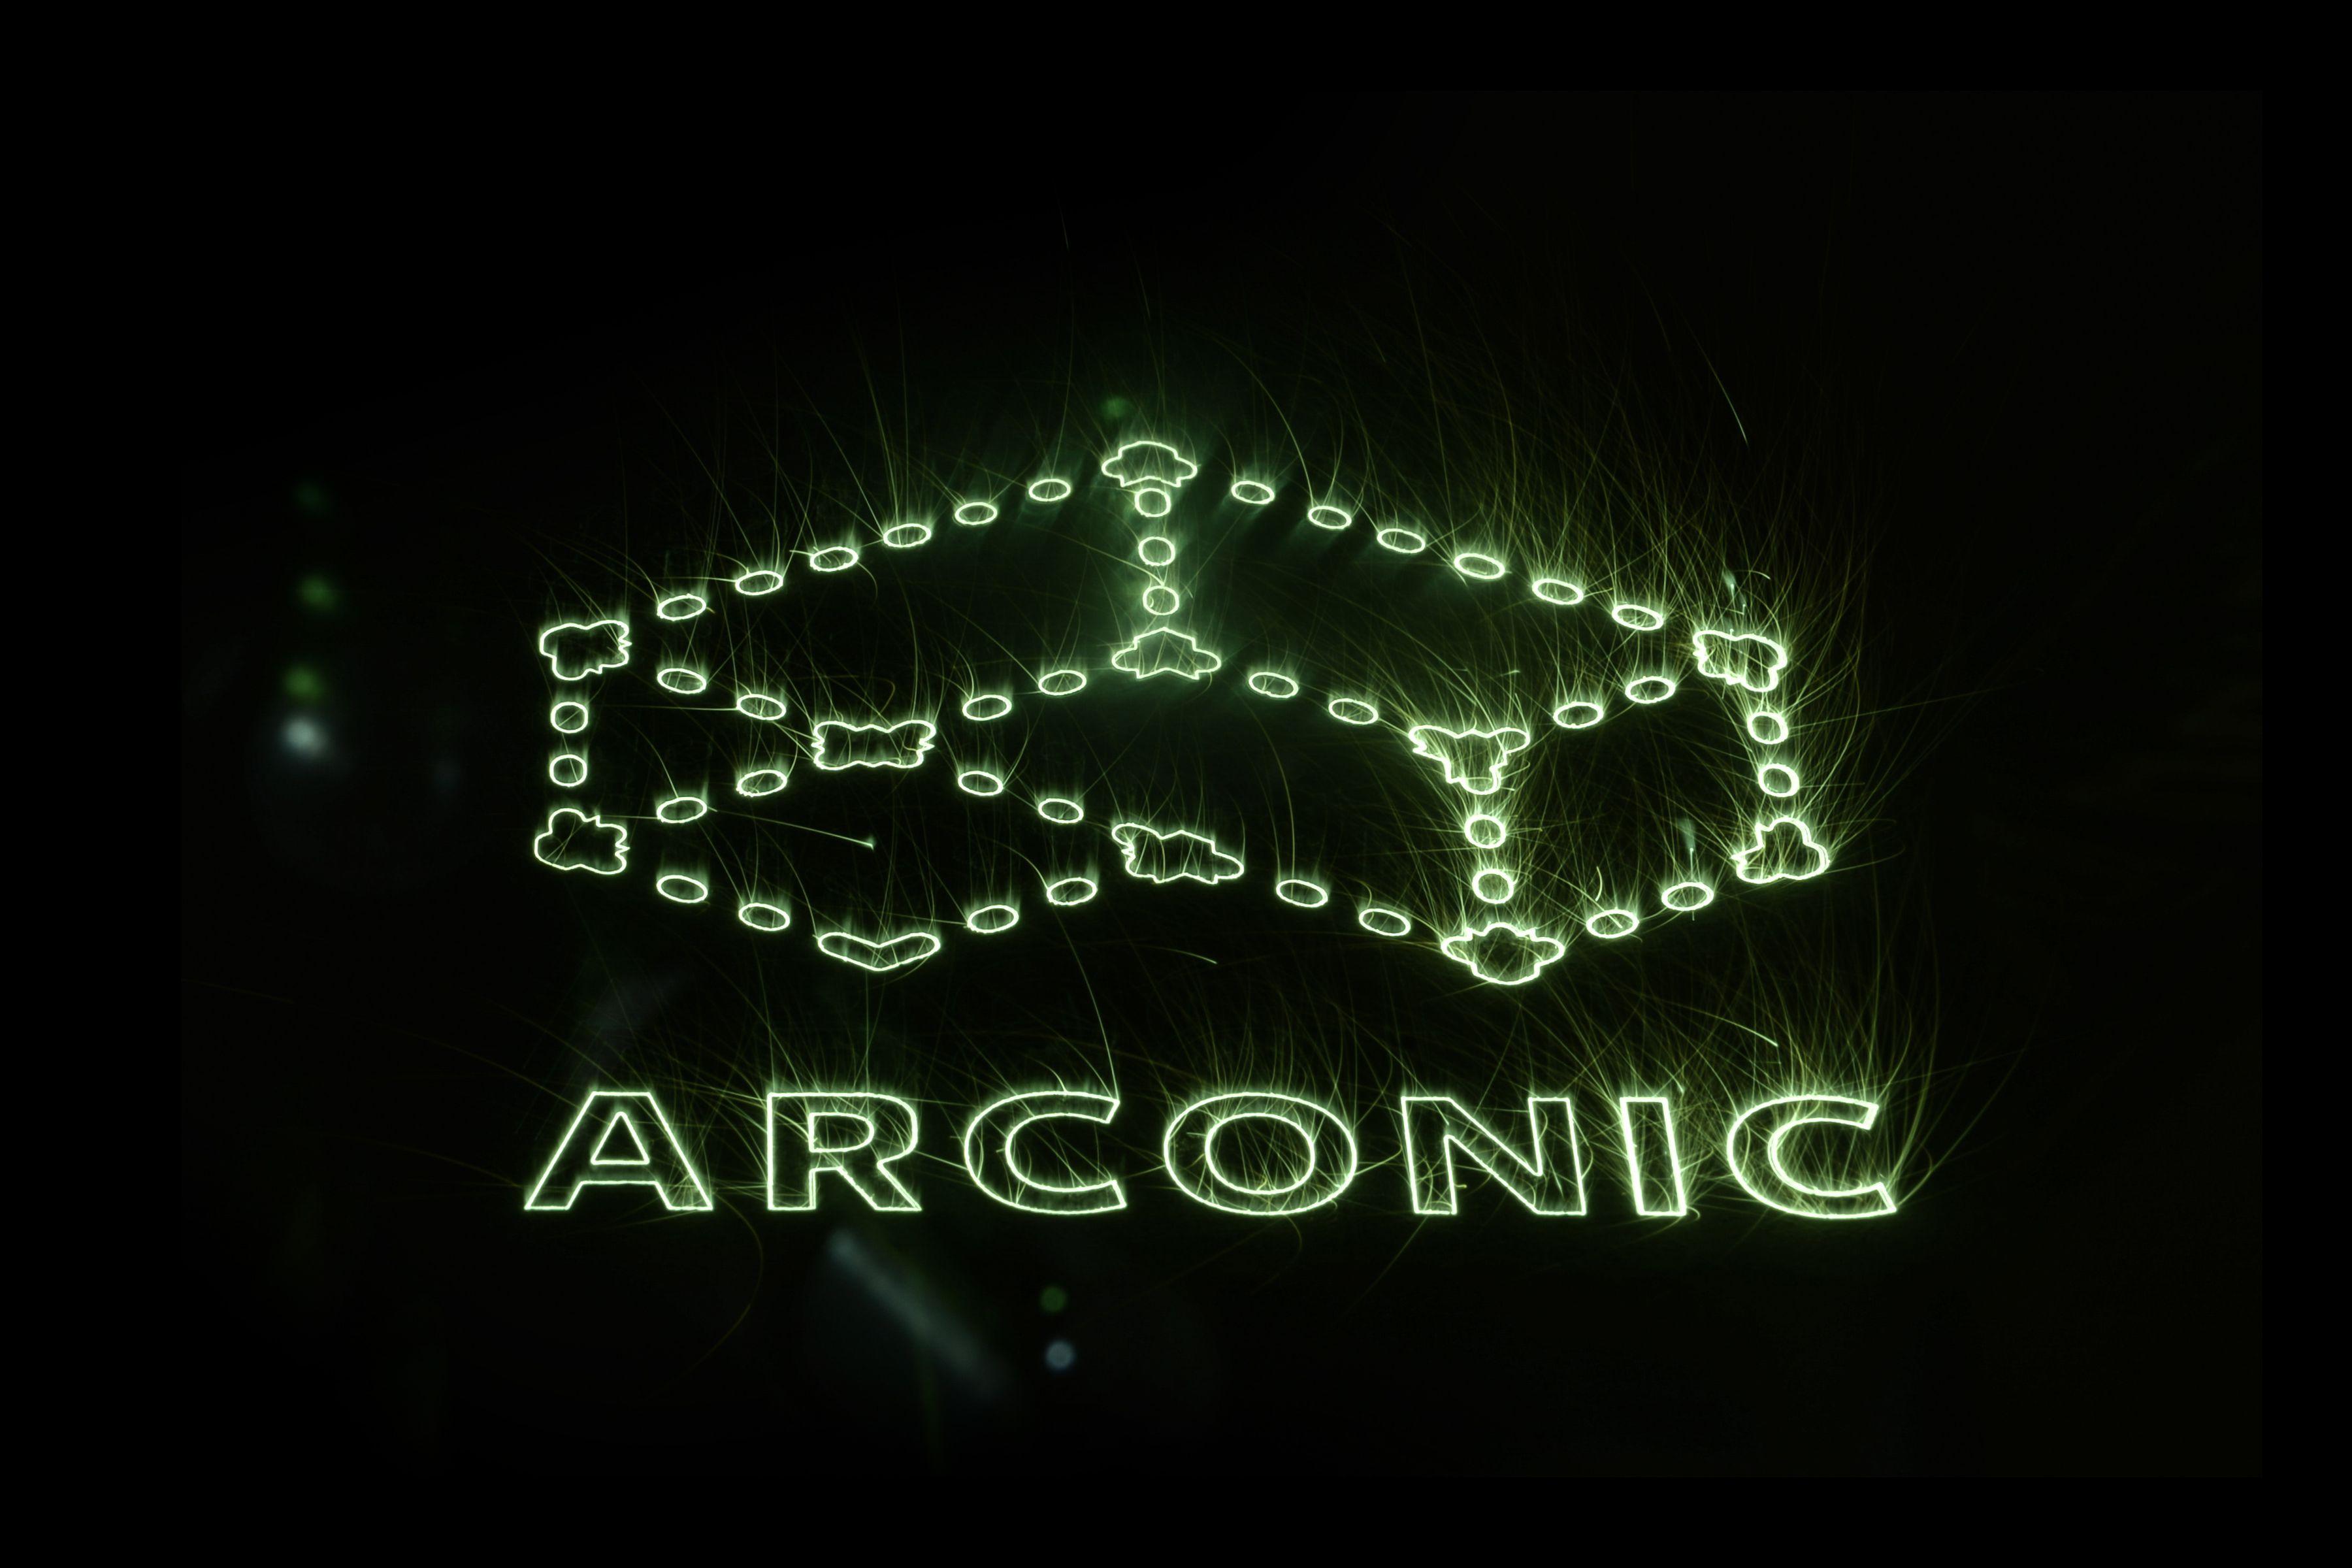 Arconic Logo - Arconic | News | Media Gallery